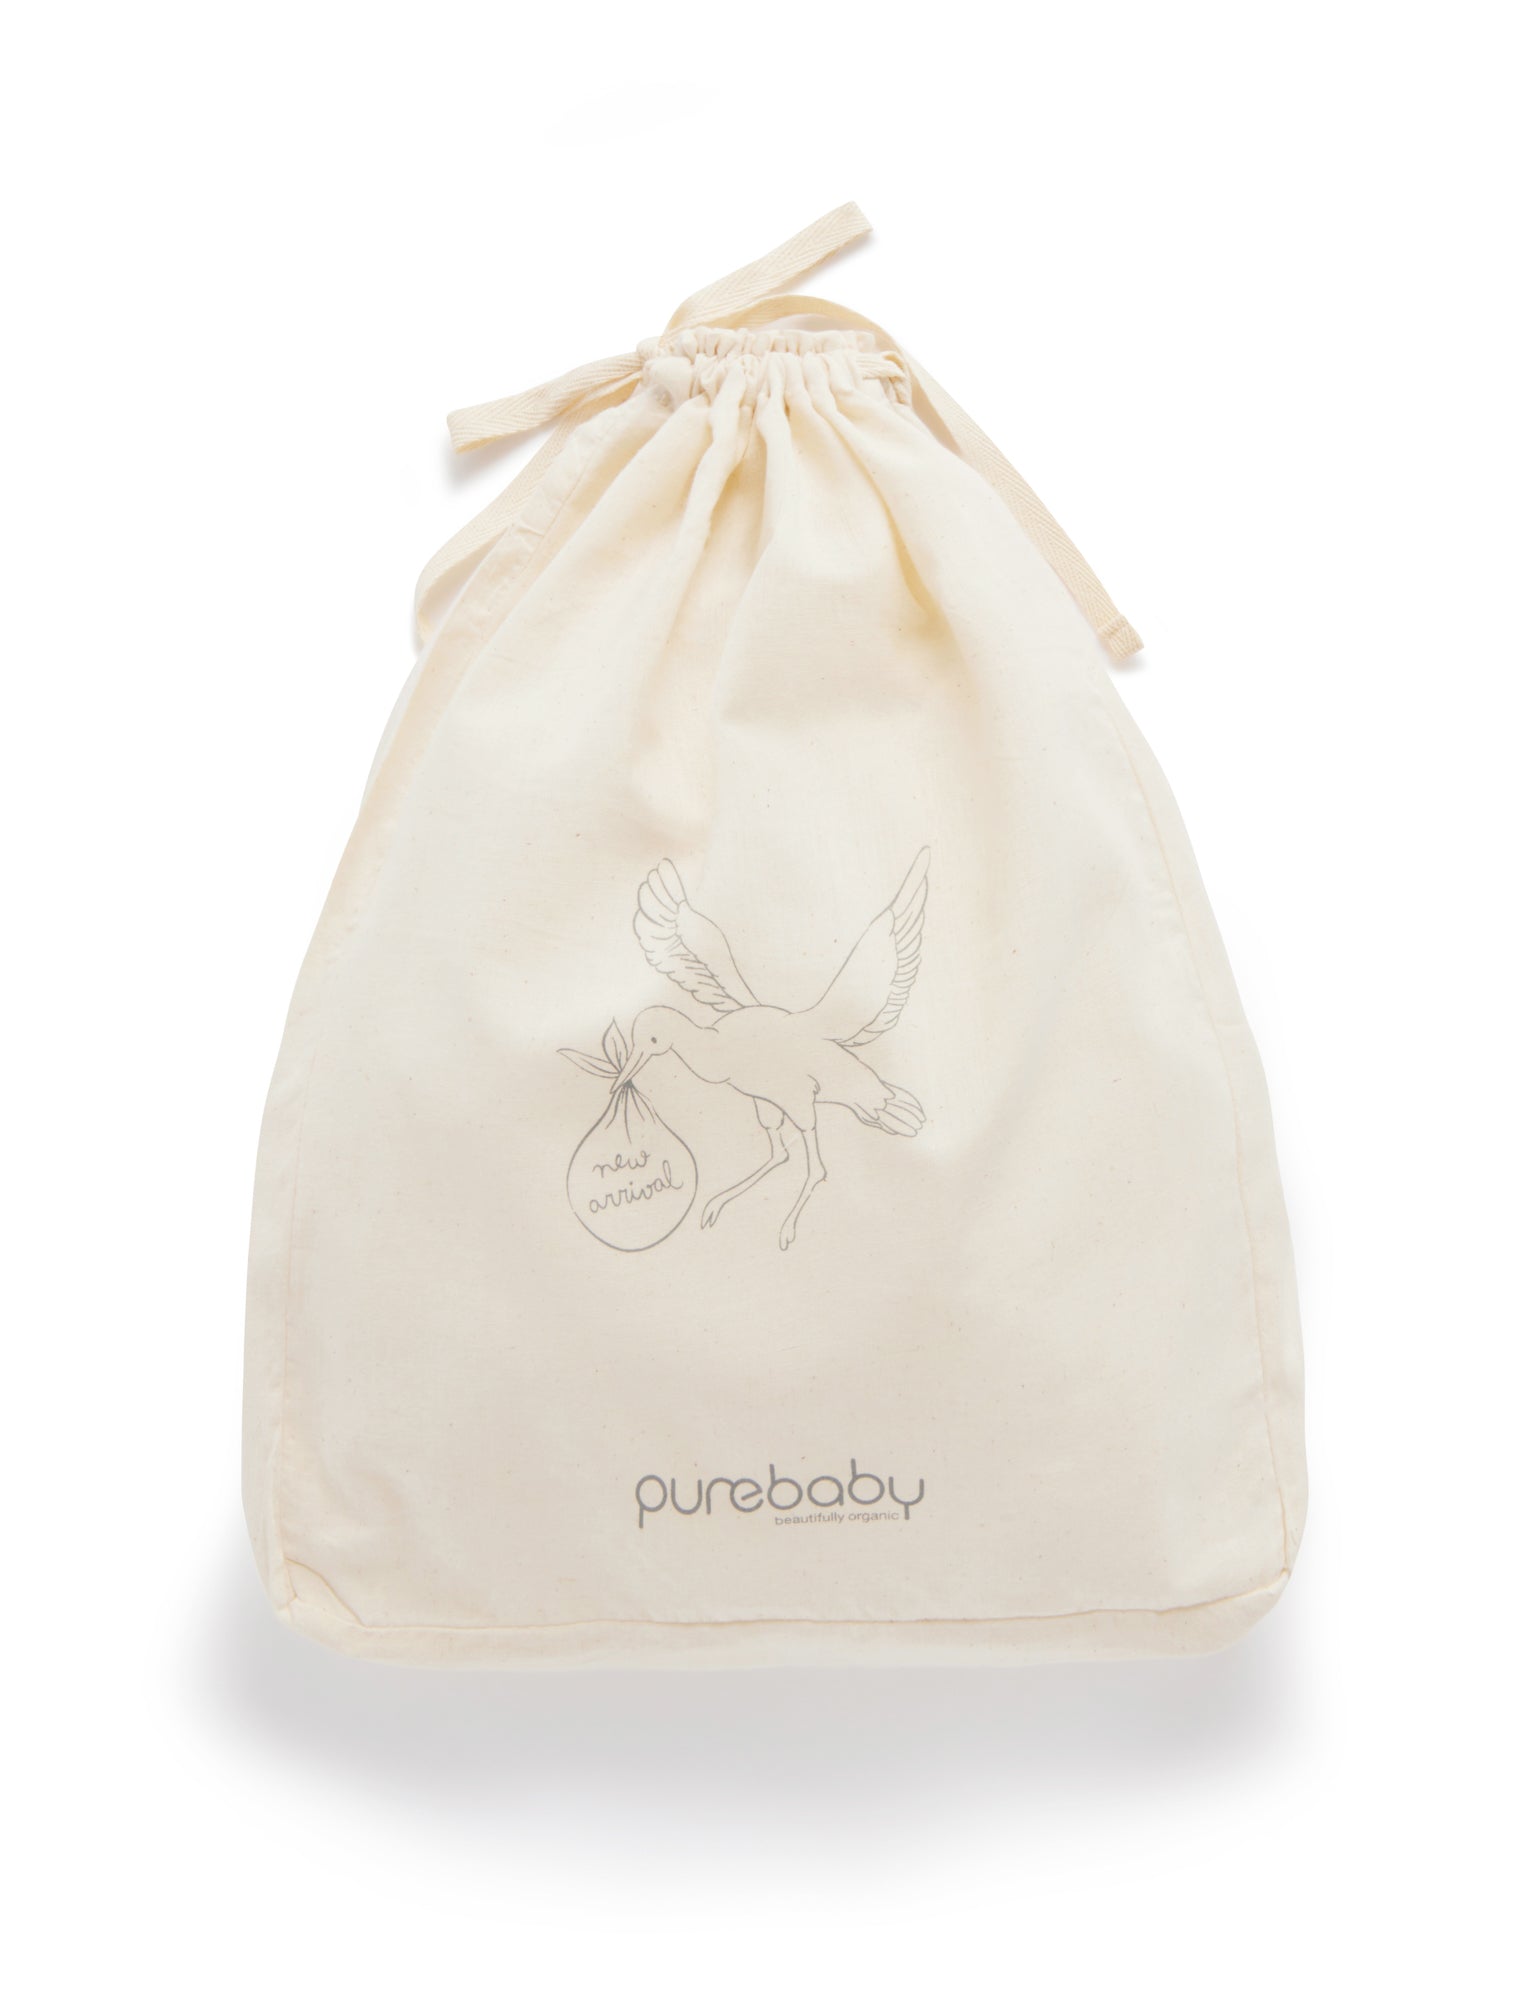 buy-pure-baby-newborn-essentials-hospital-bag-online-perth-australia-afterpay-california